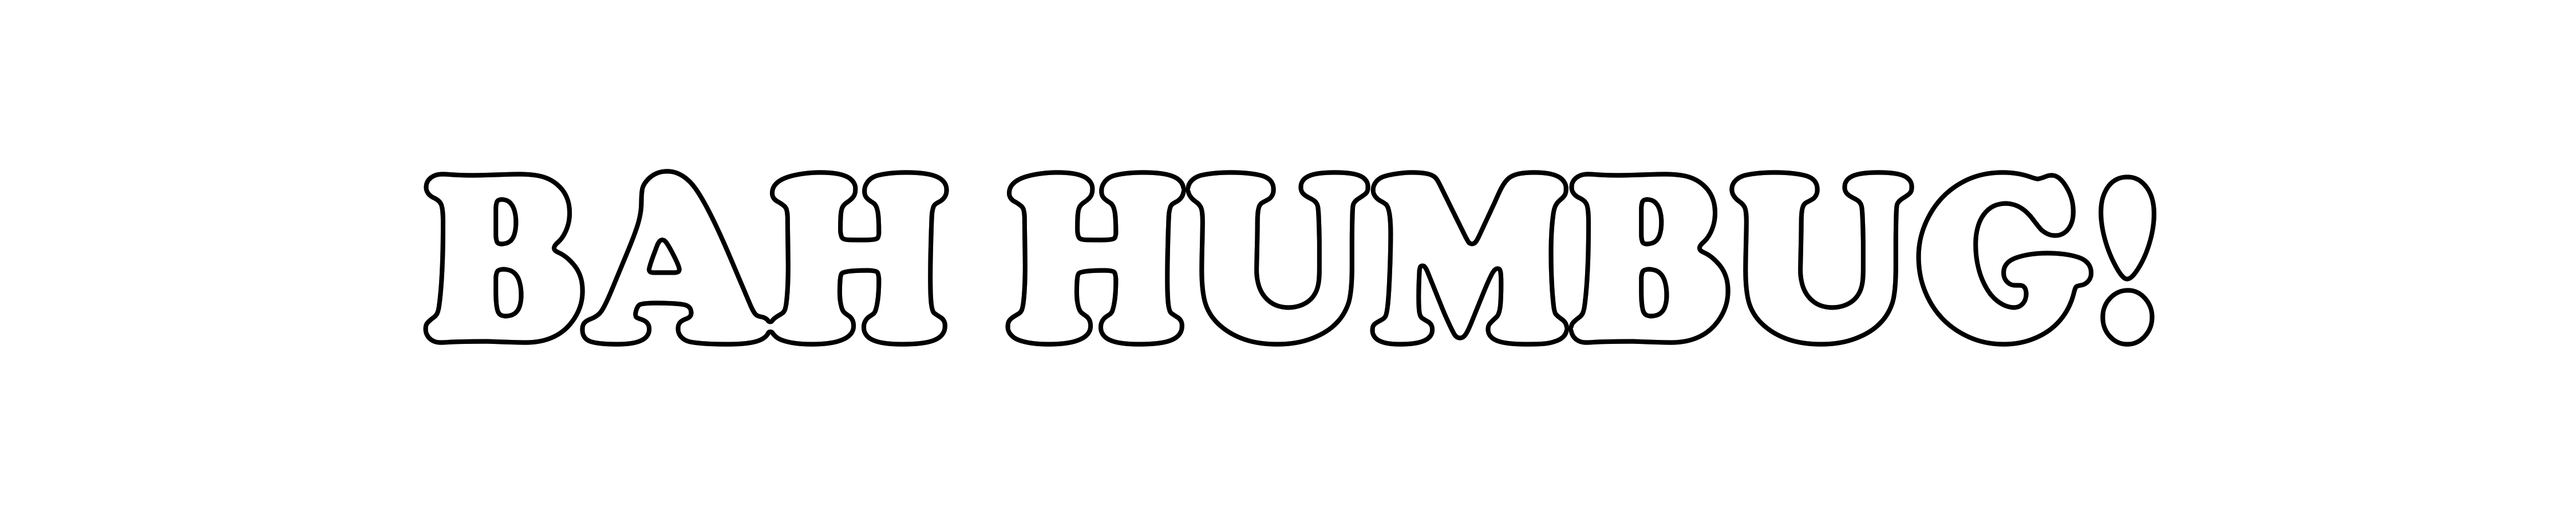 Bah Humbug - Word Art